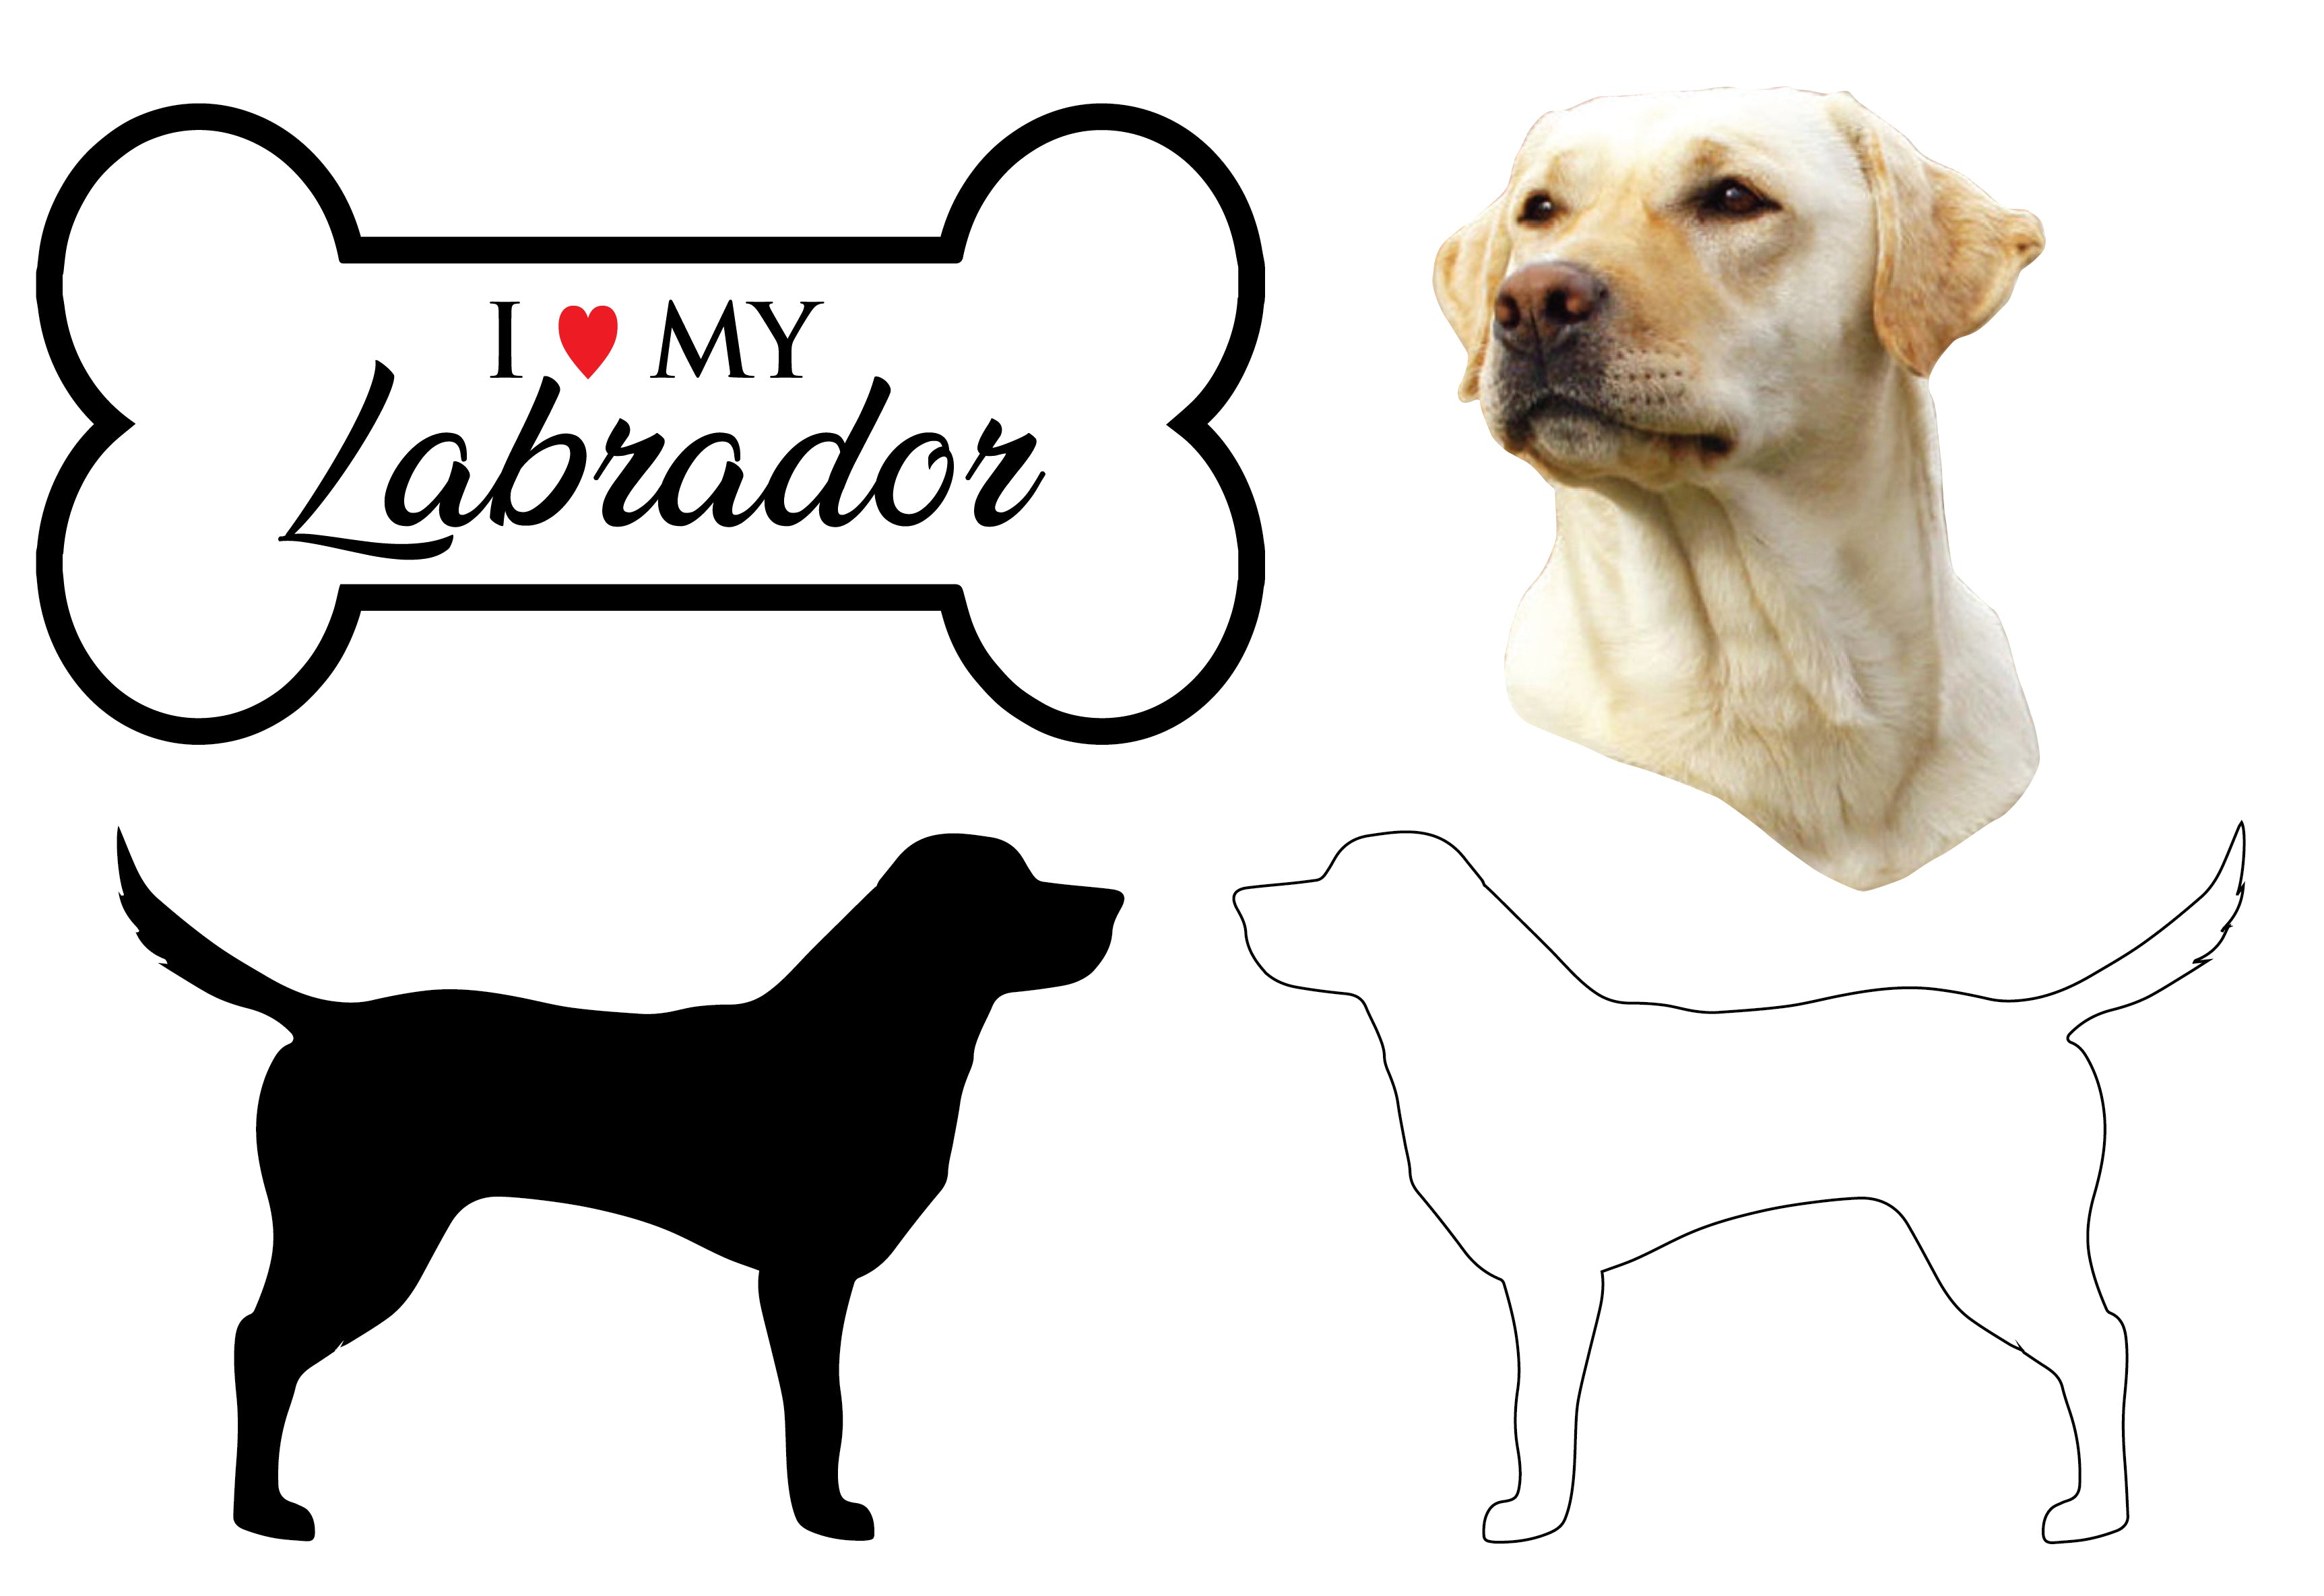 Labrador - Dog Breed Decals (Set of 16) - Sizes in Description